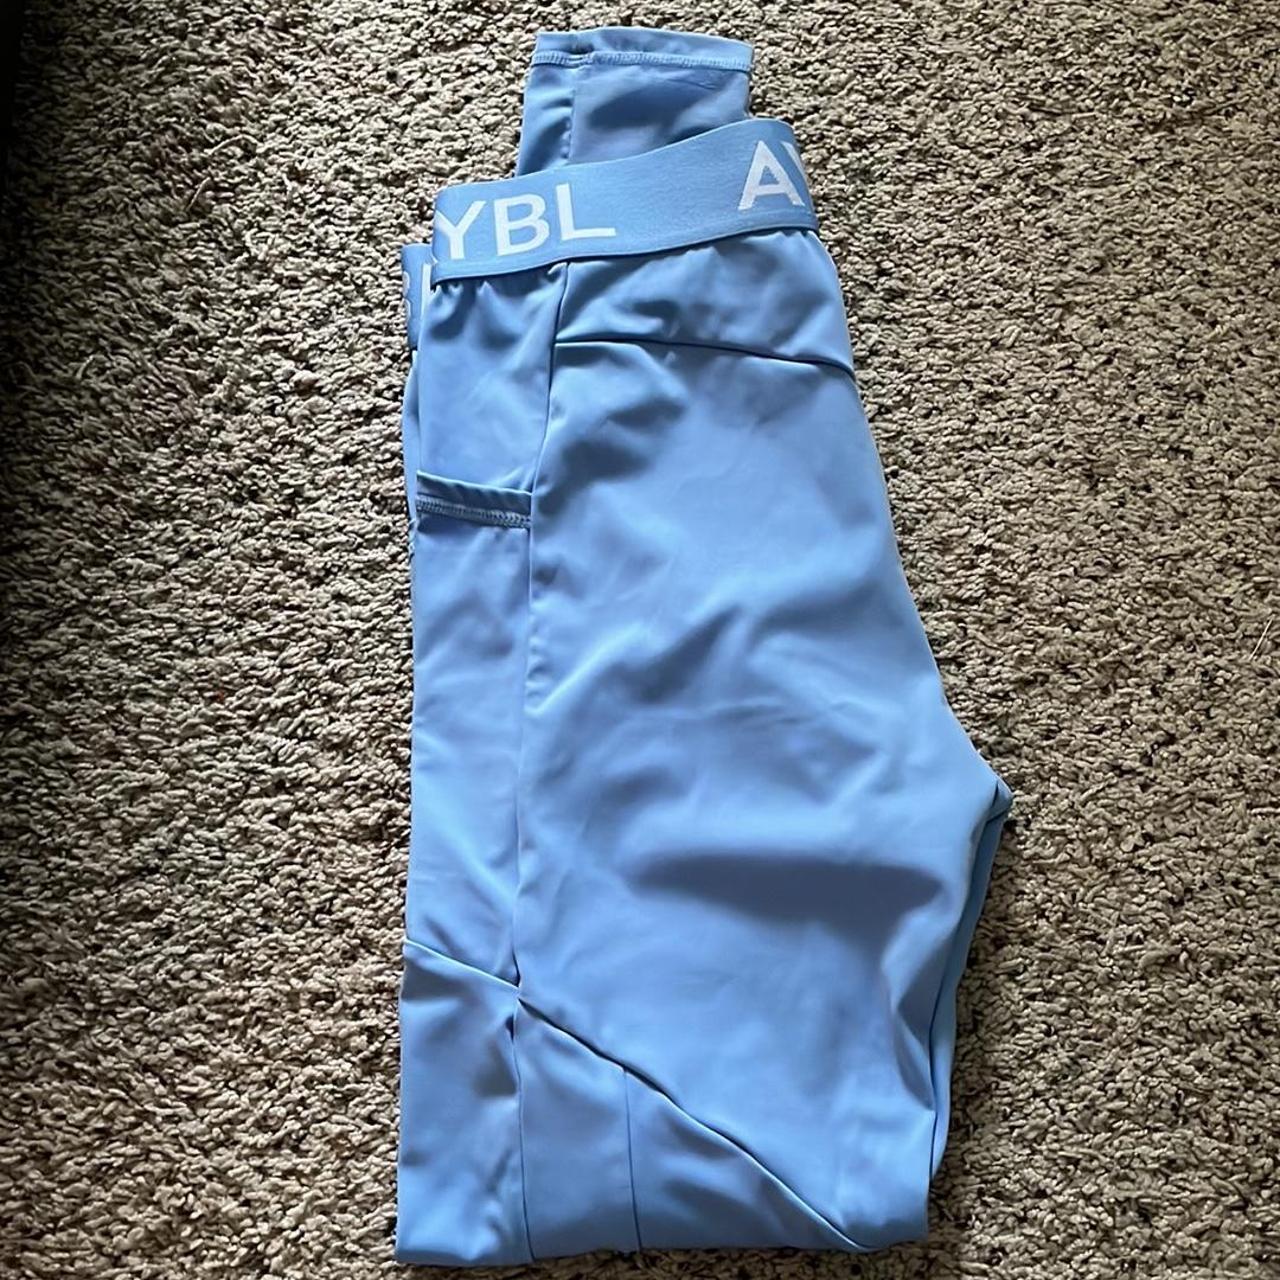 AYBL lilac (ice blue on AYBL) leggings, size medium - Depop